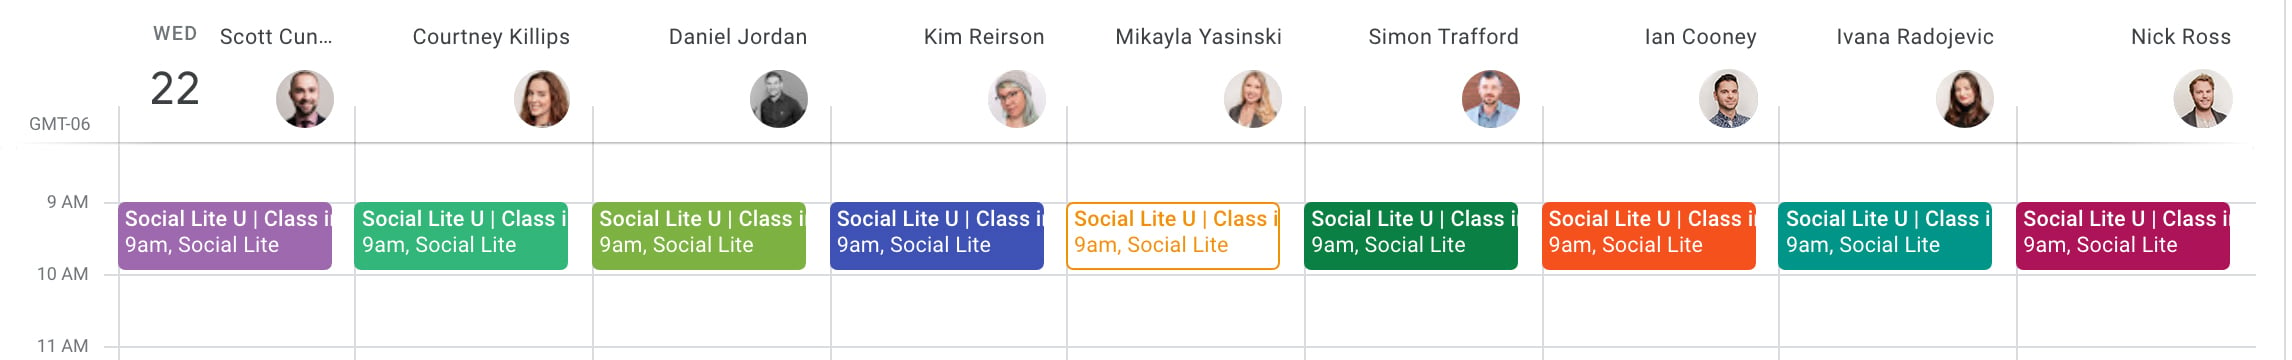 Social Lite U | Class in Session